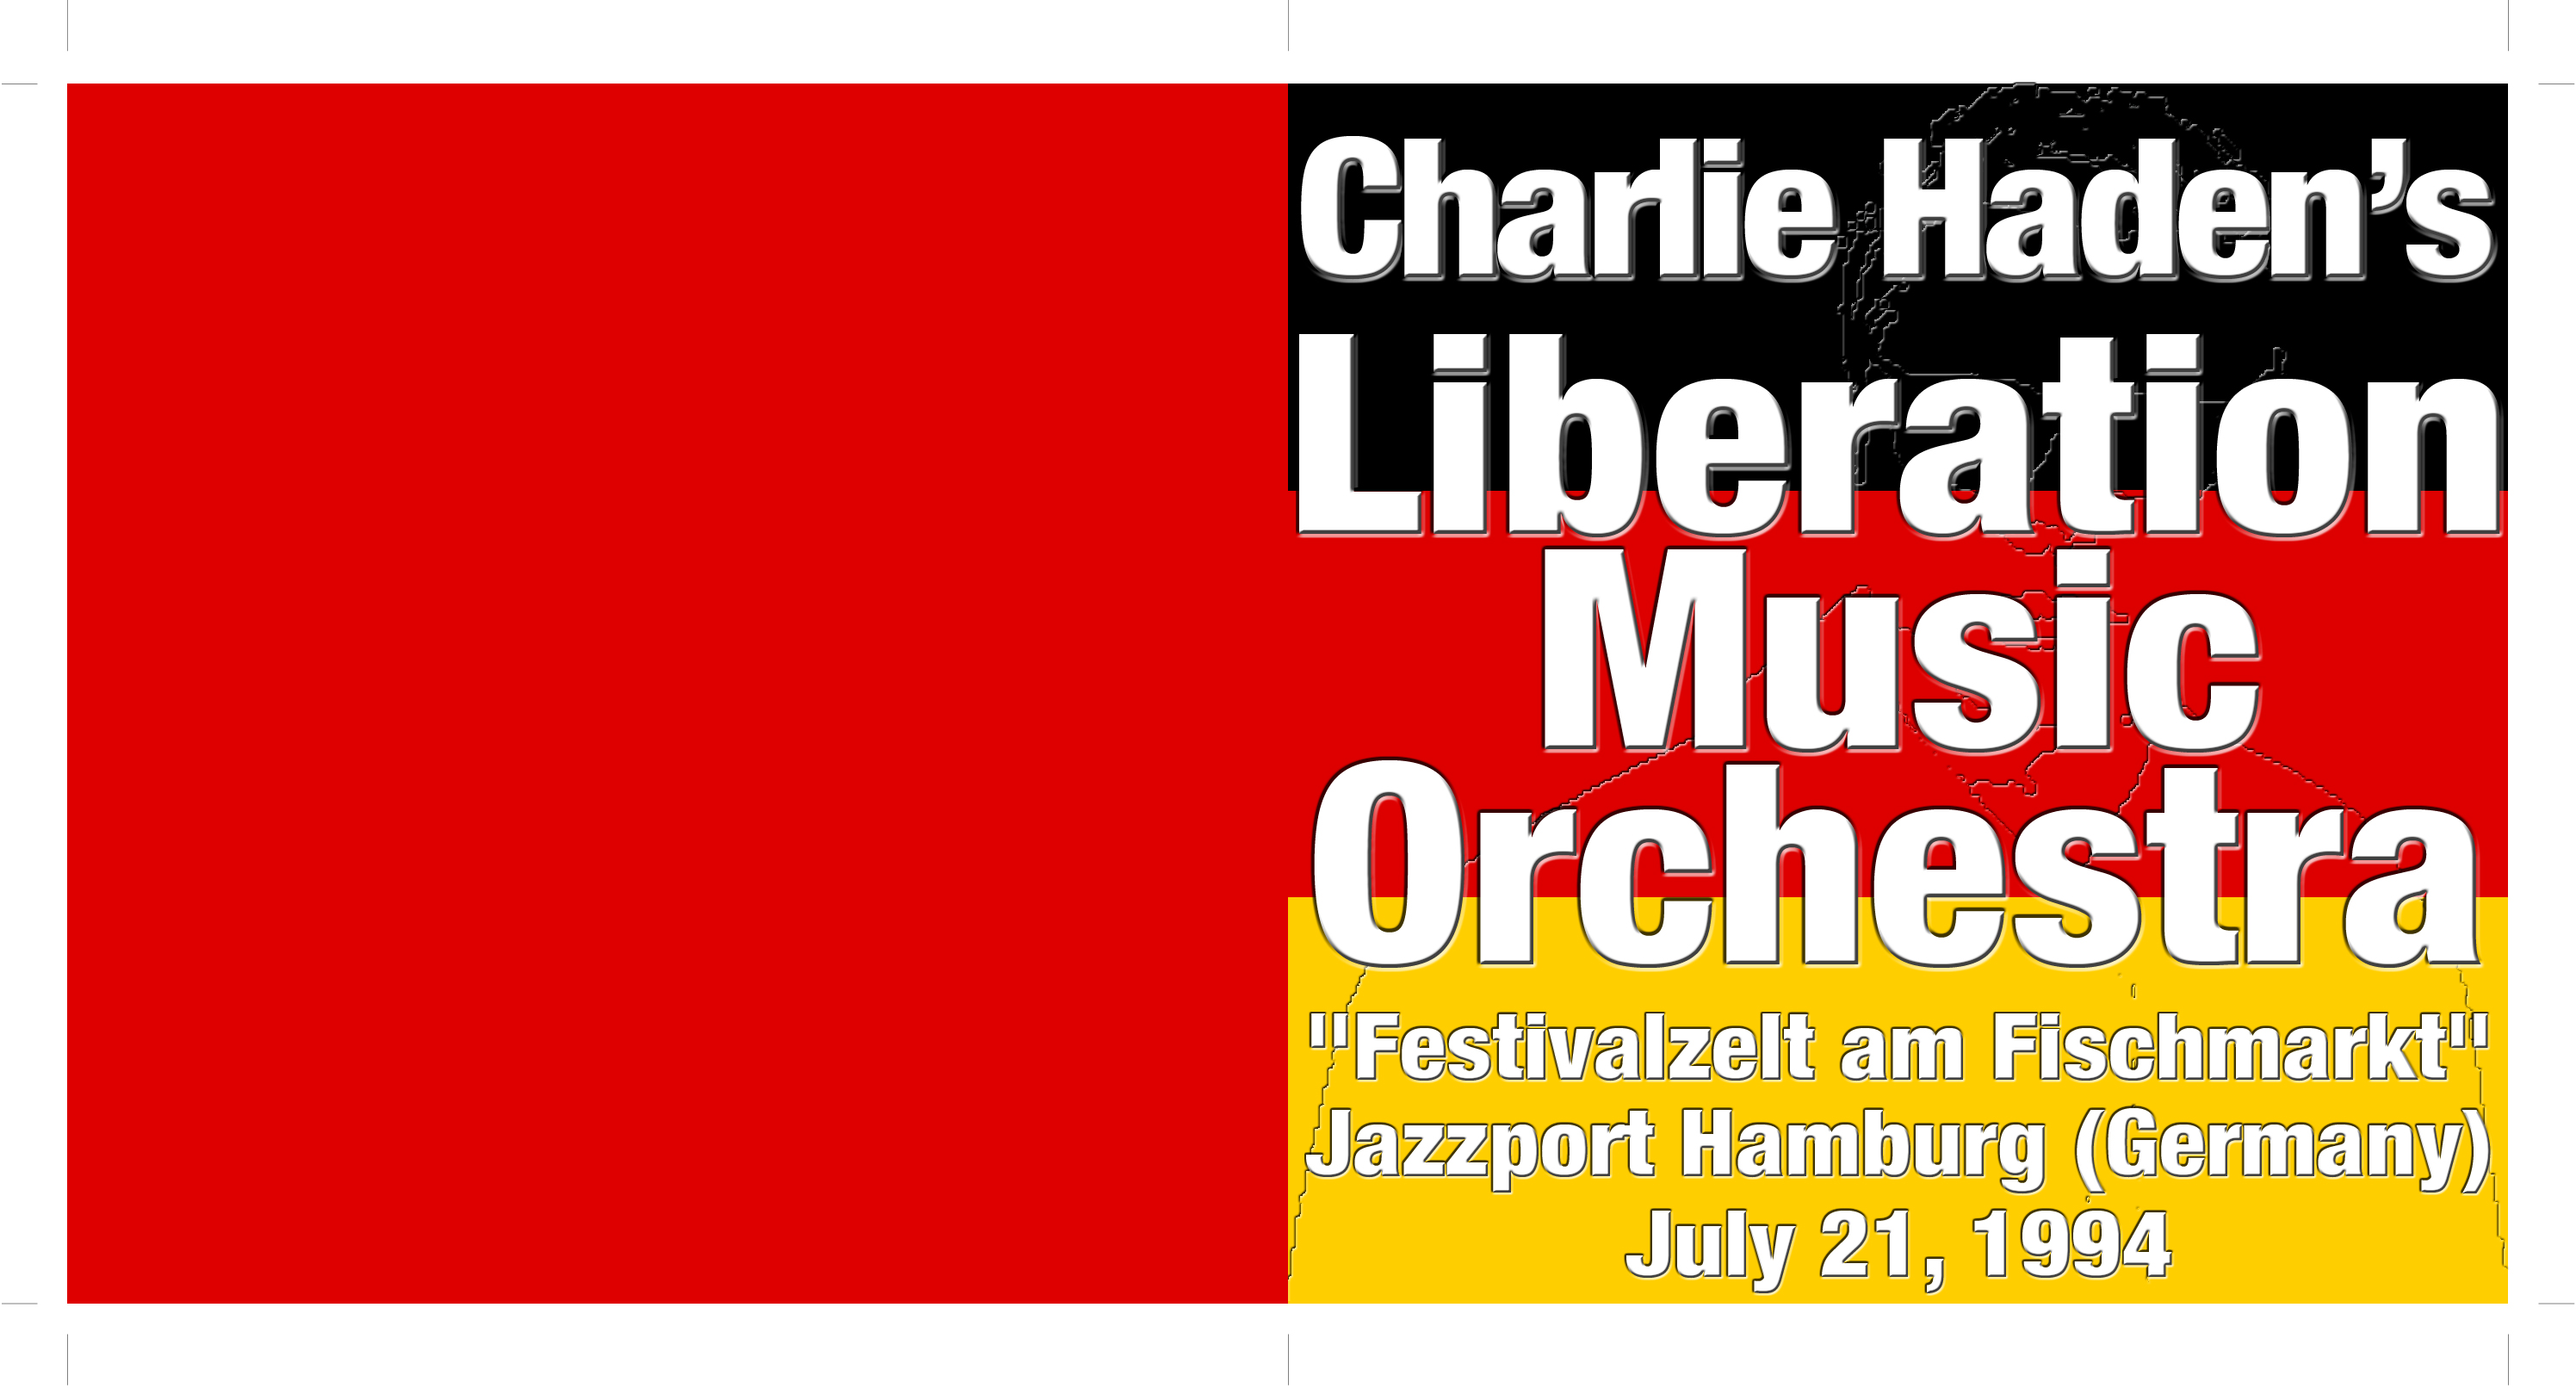 CharlieHadensLiberationMusicOrchestra1994-07-21FestivalzeltAmFischmarktHamburGermany (4).jpg